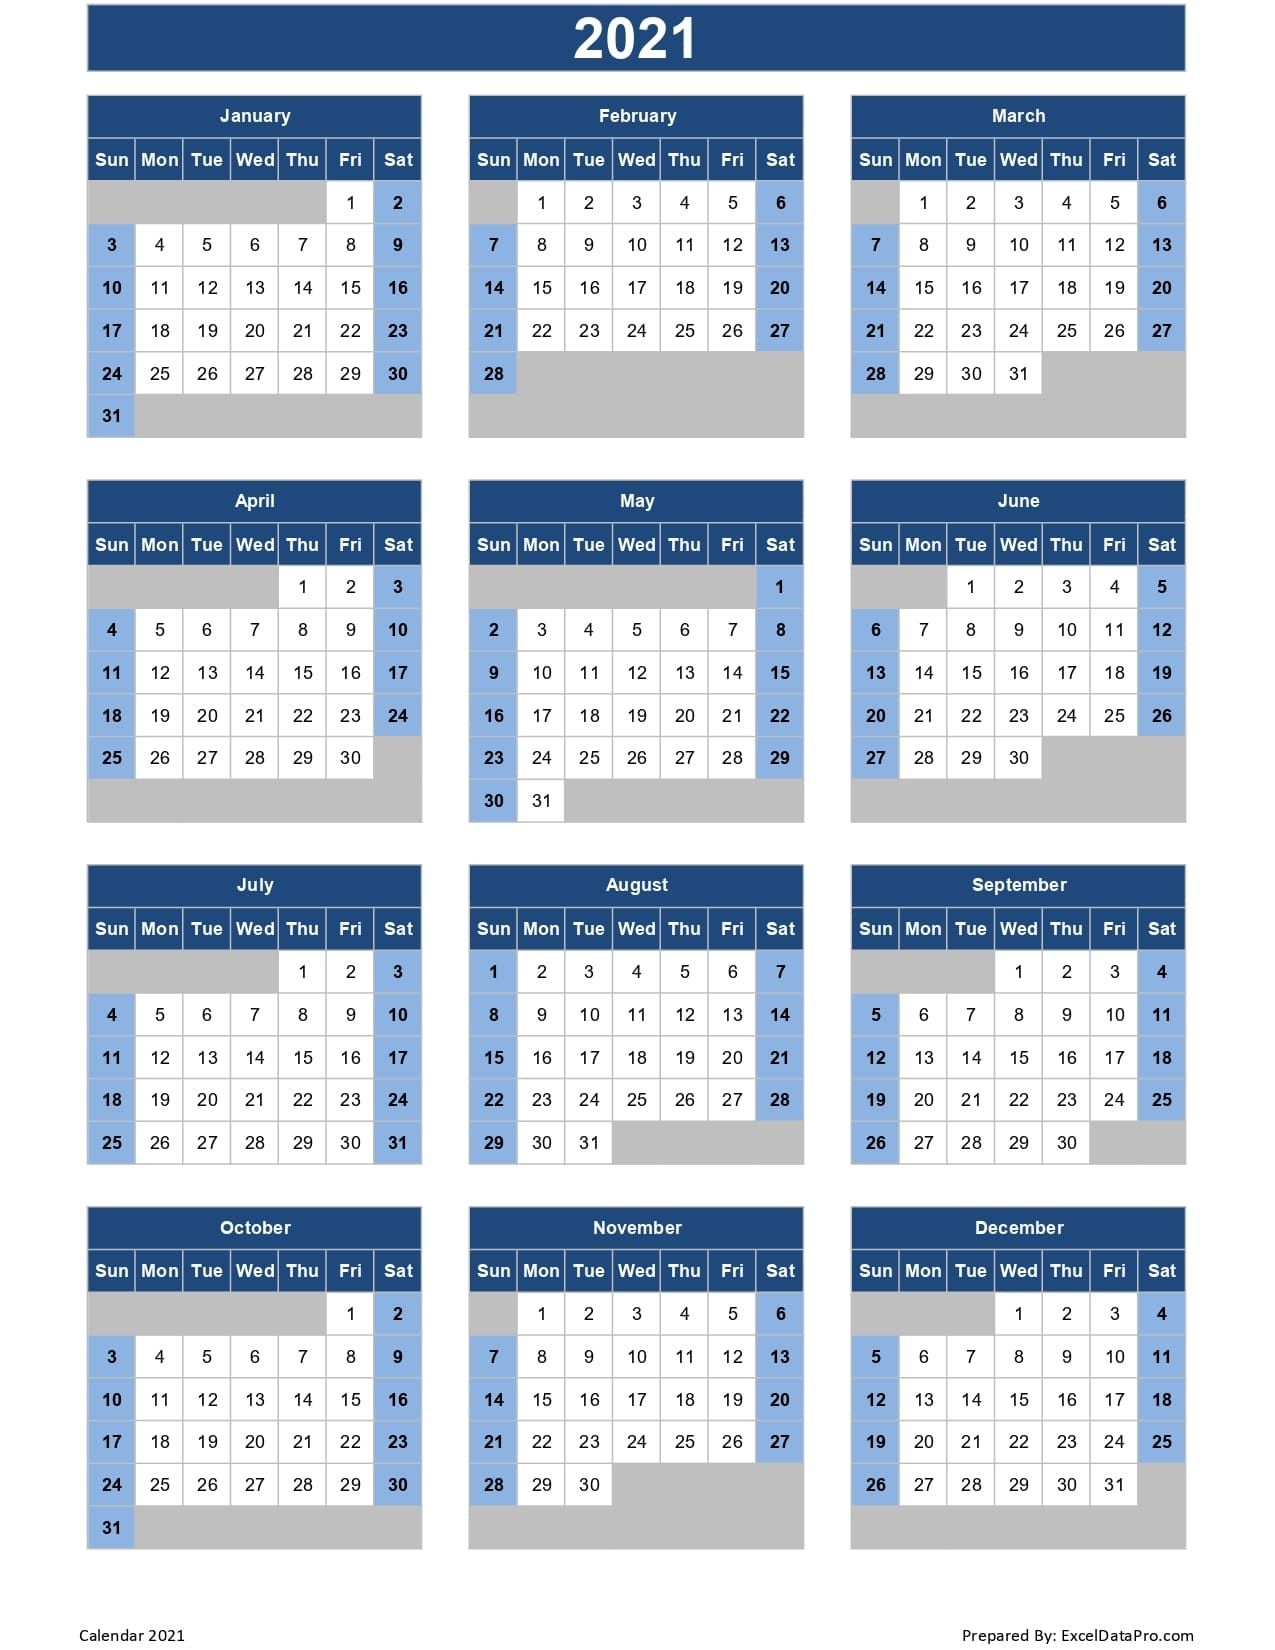 Calendar 2021 Excel Templates, Printable Pdfs & Images